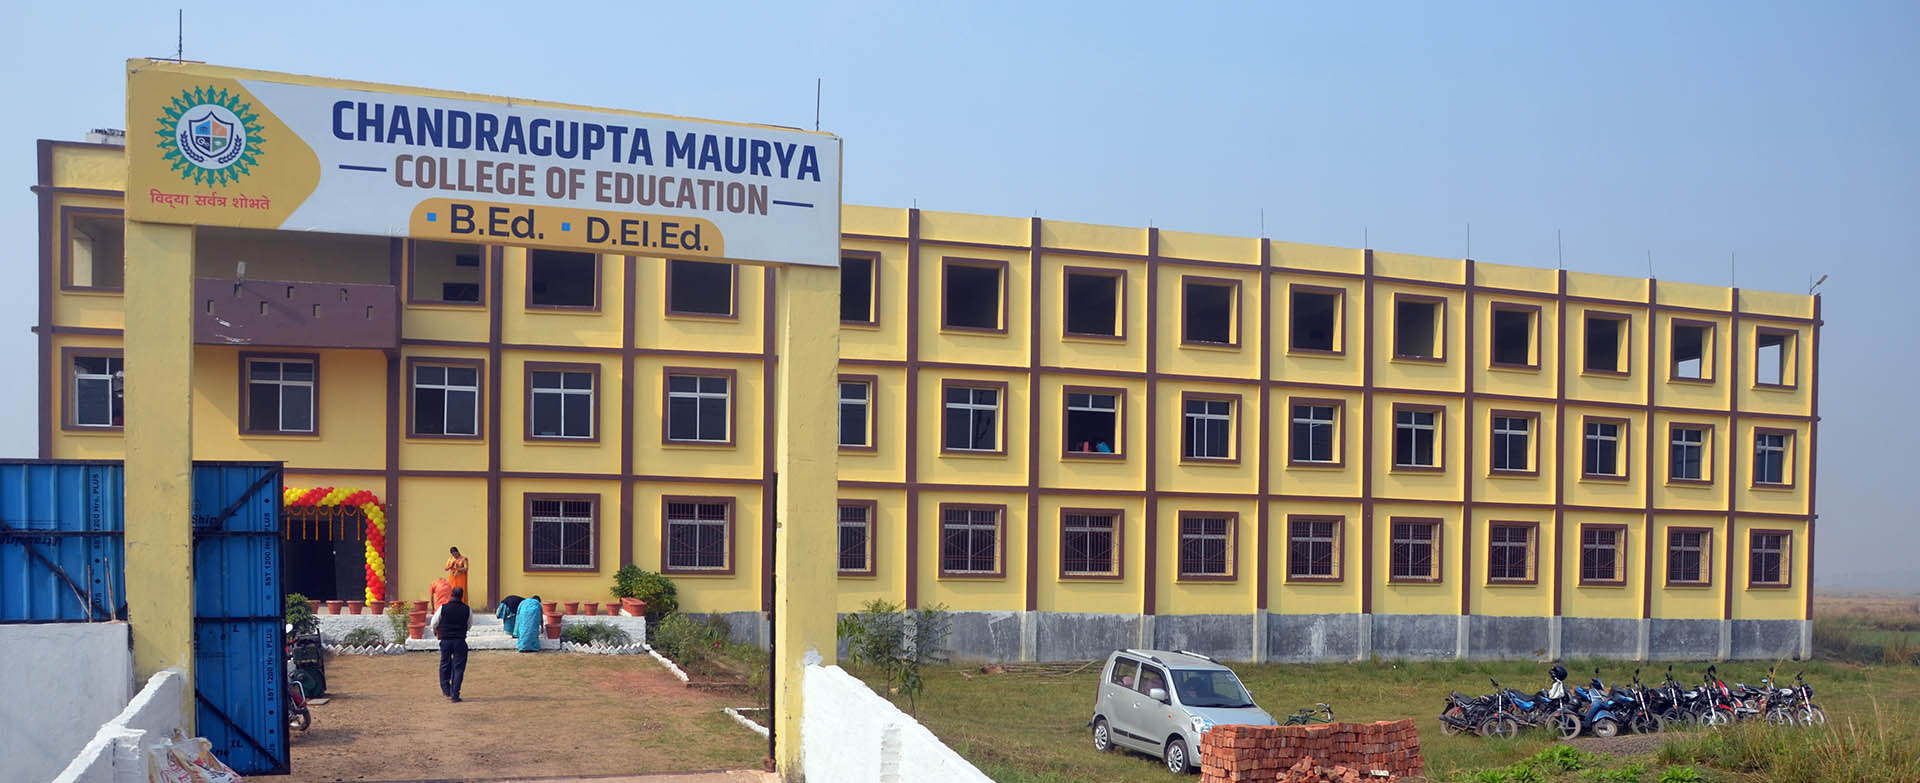 Chadragupta Maurya College of Education